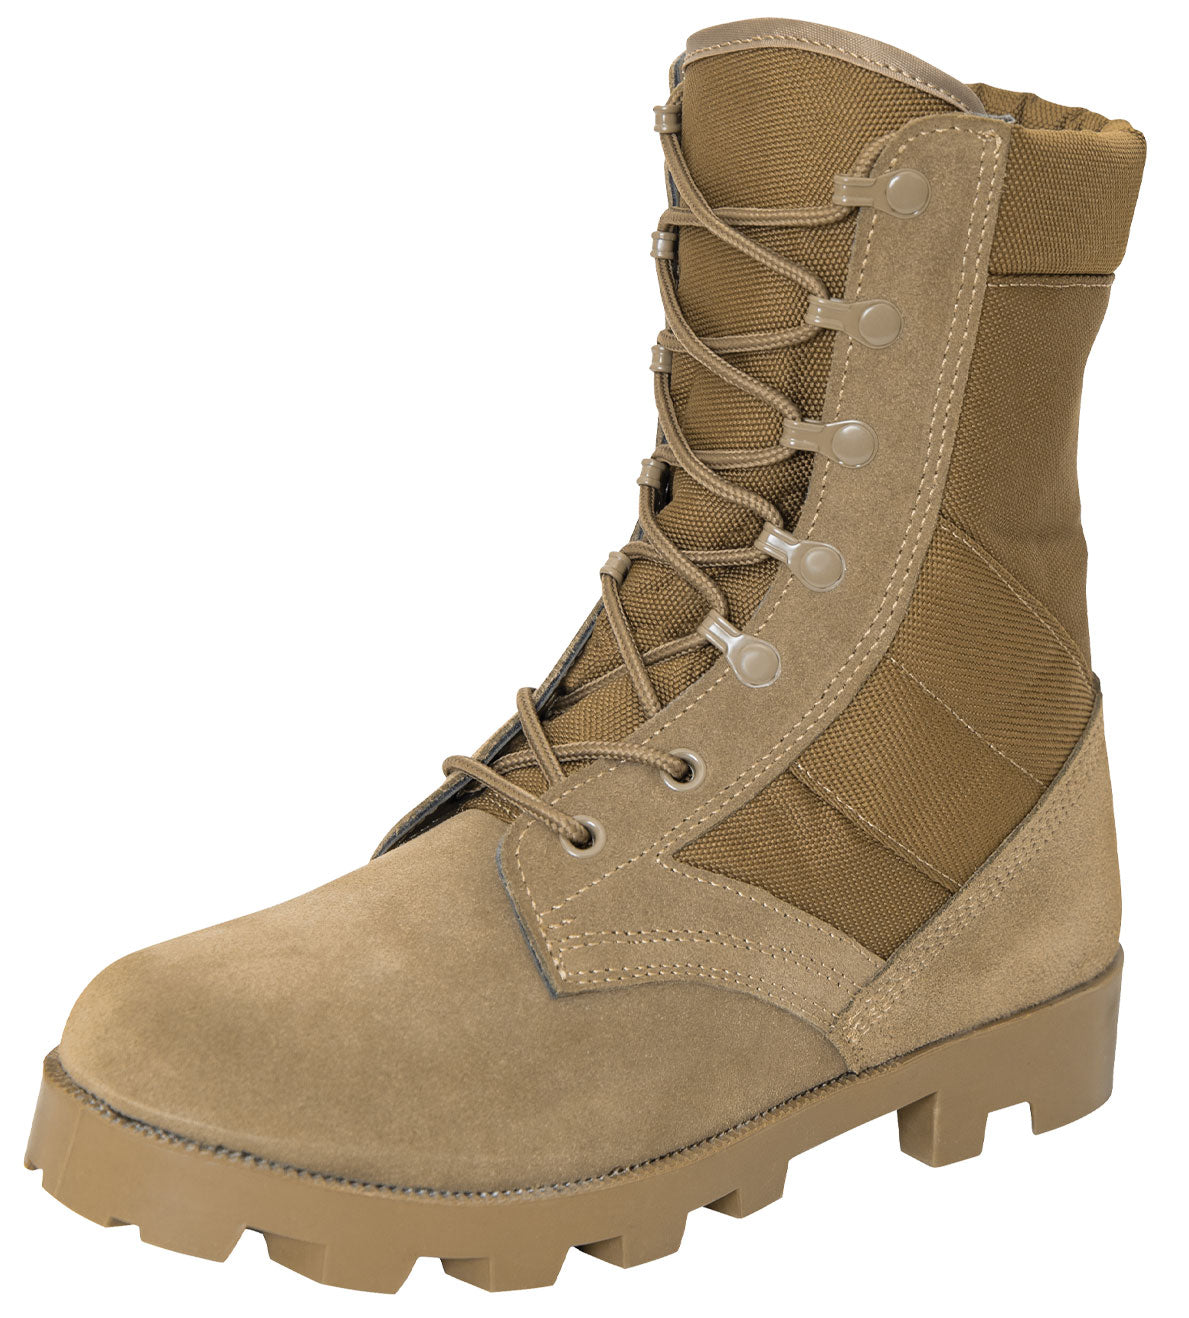 Milspec G.I. Type Speedlace Combat / Jungle Boot - 8 Inch Jungle Boots MilTac Tactical Military Outdoor Gear Australia